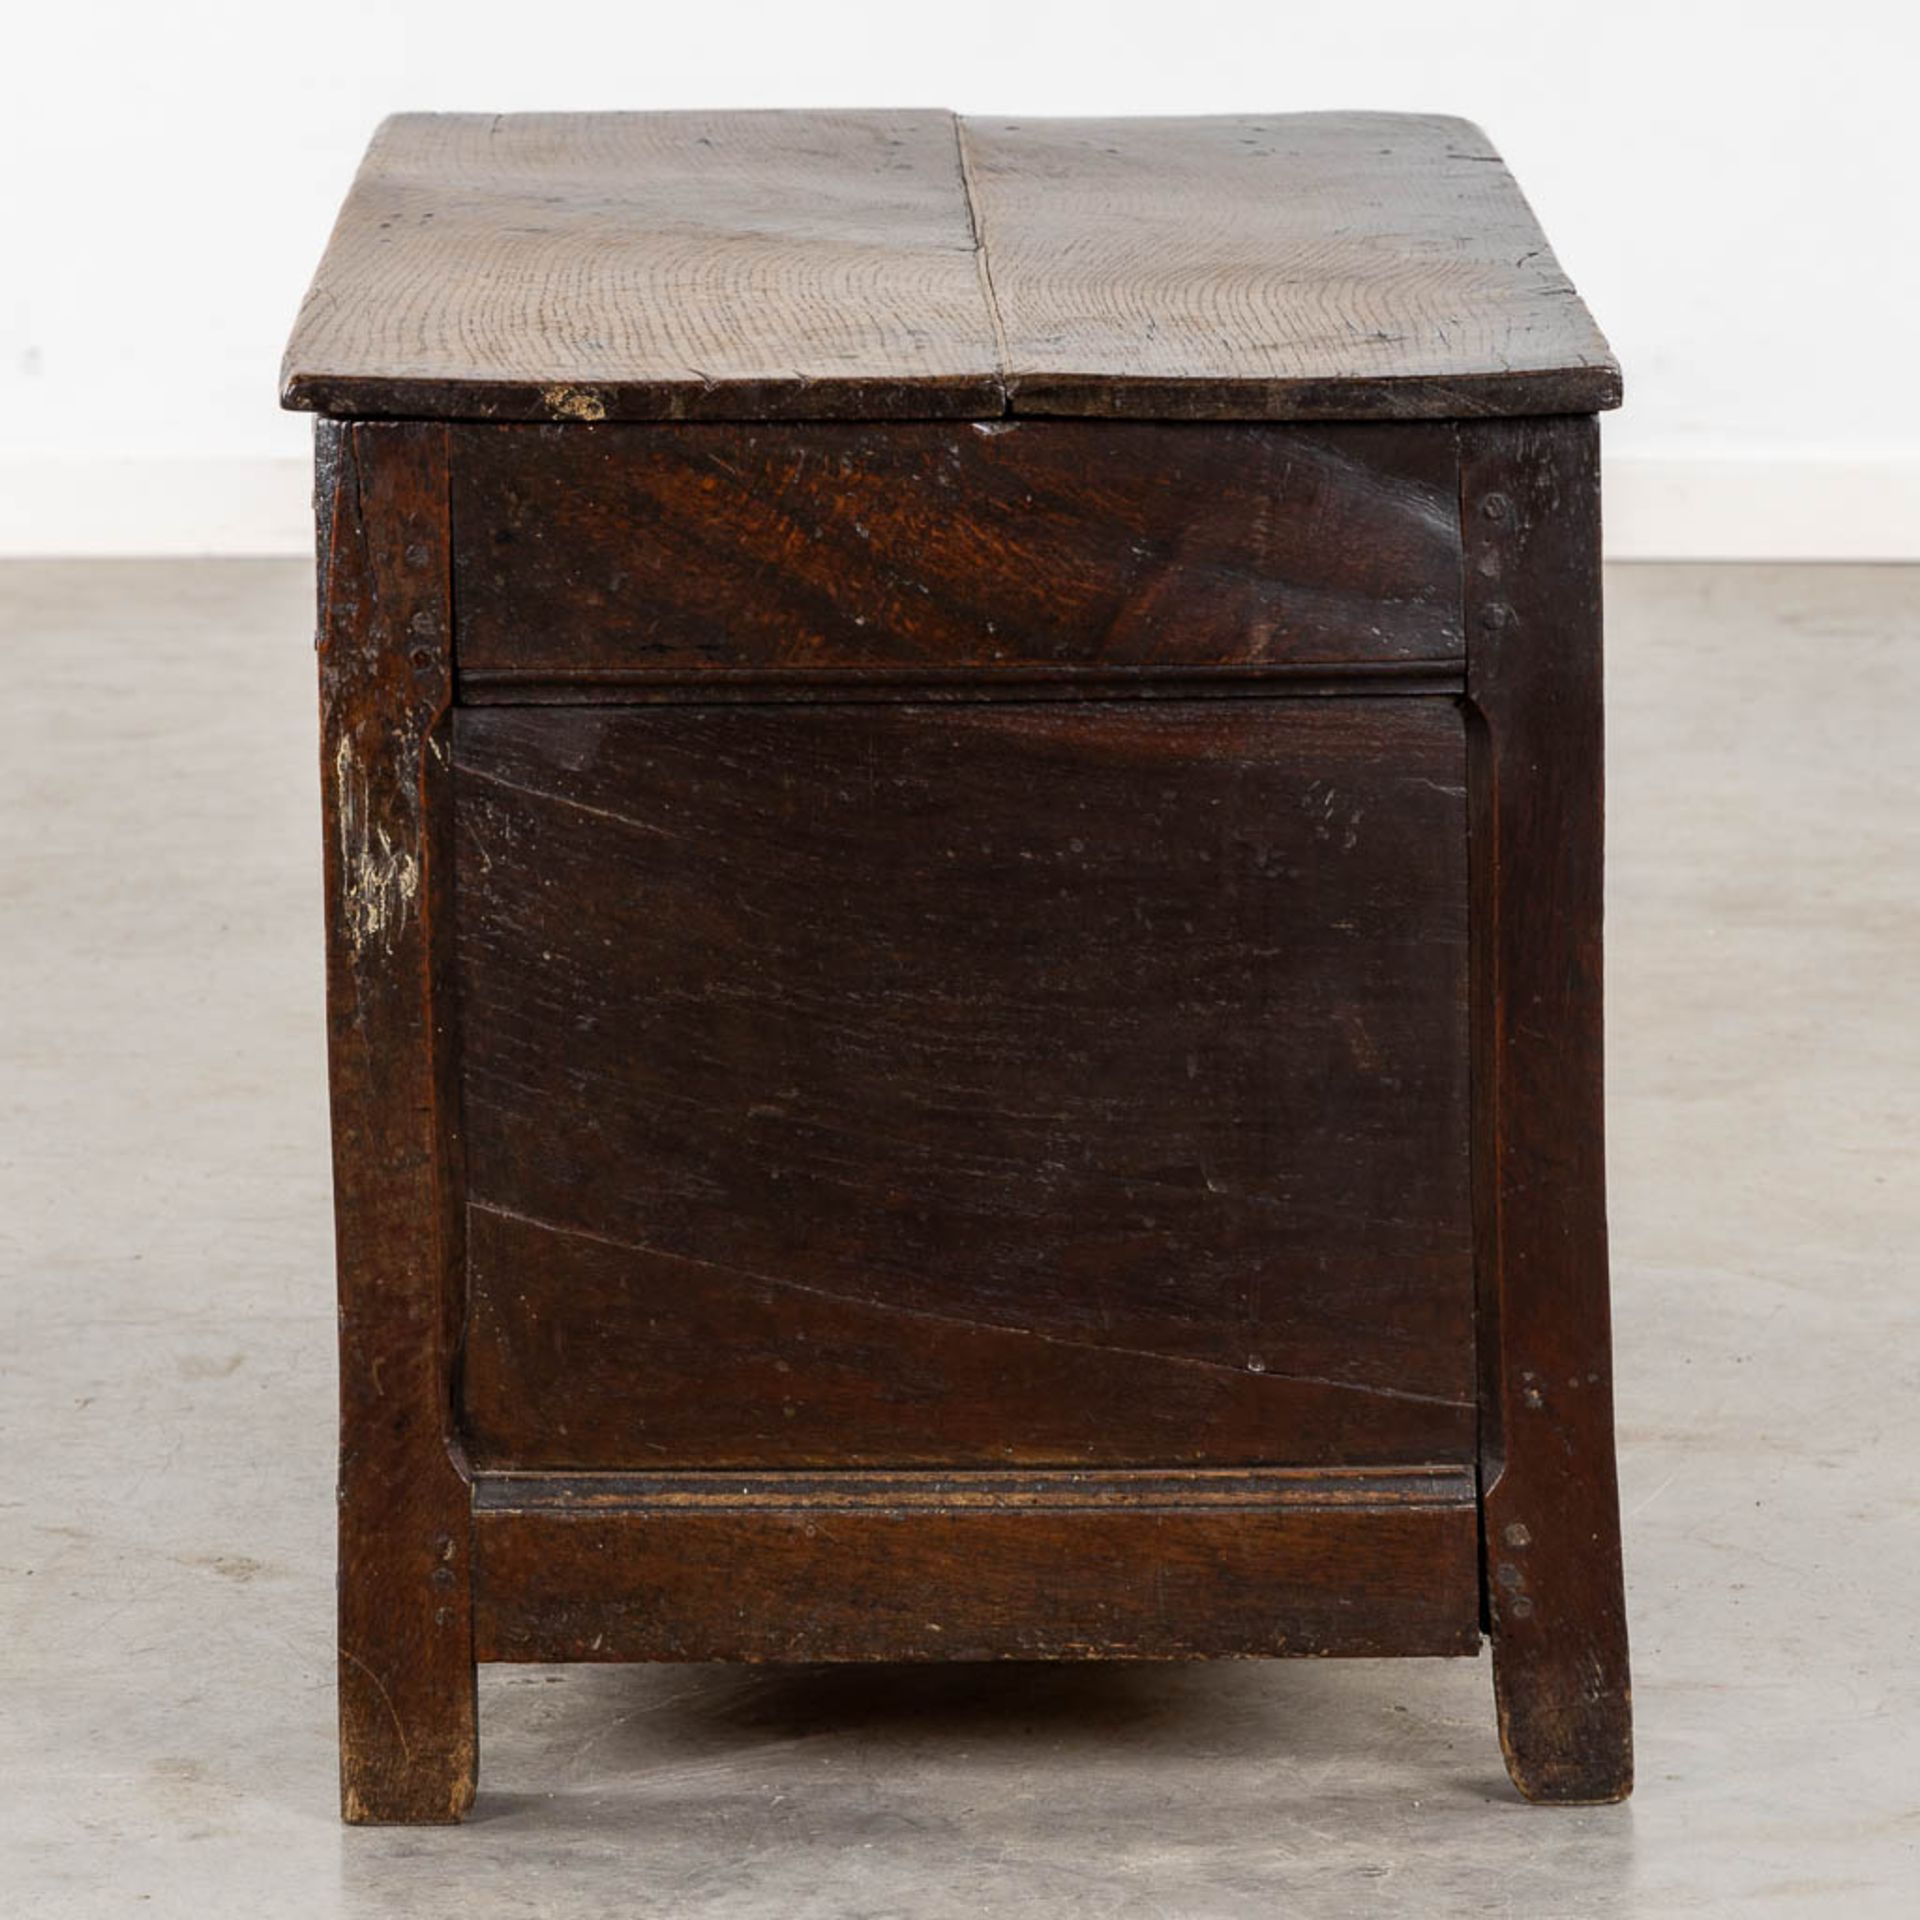 An antique wood-sculptured chest, 18th C. (L:52 x W:98 x H:56 cm) - Bild 5 aus 9